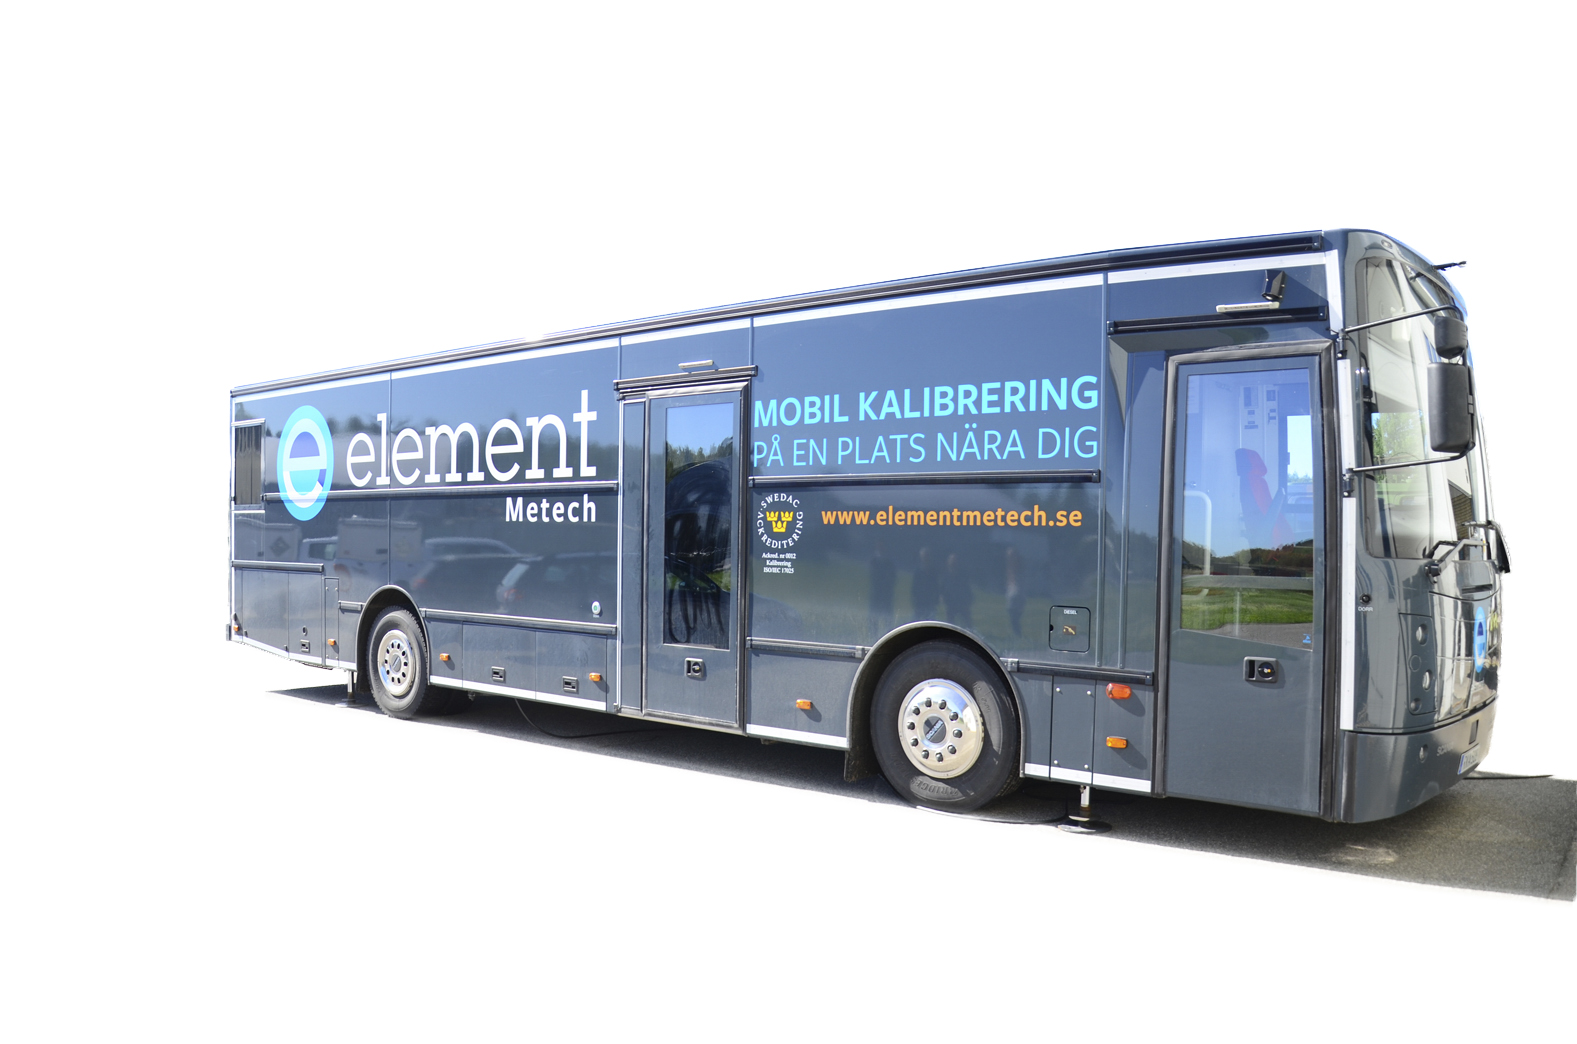 Mätbussen, Element Metechs mobila kalibreringslaboratorium